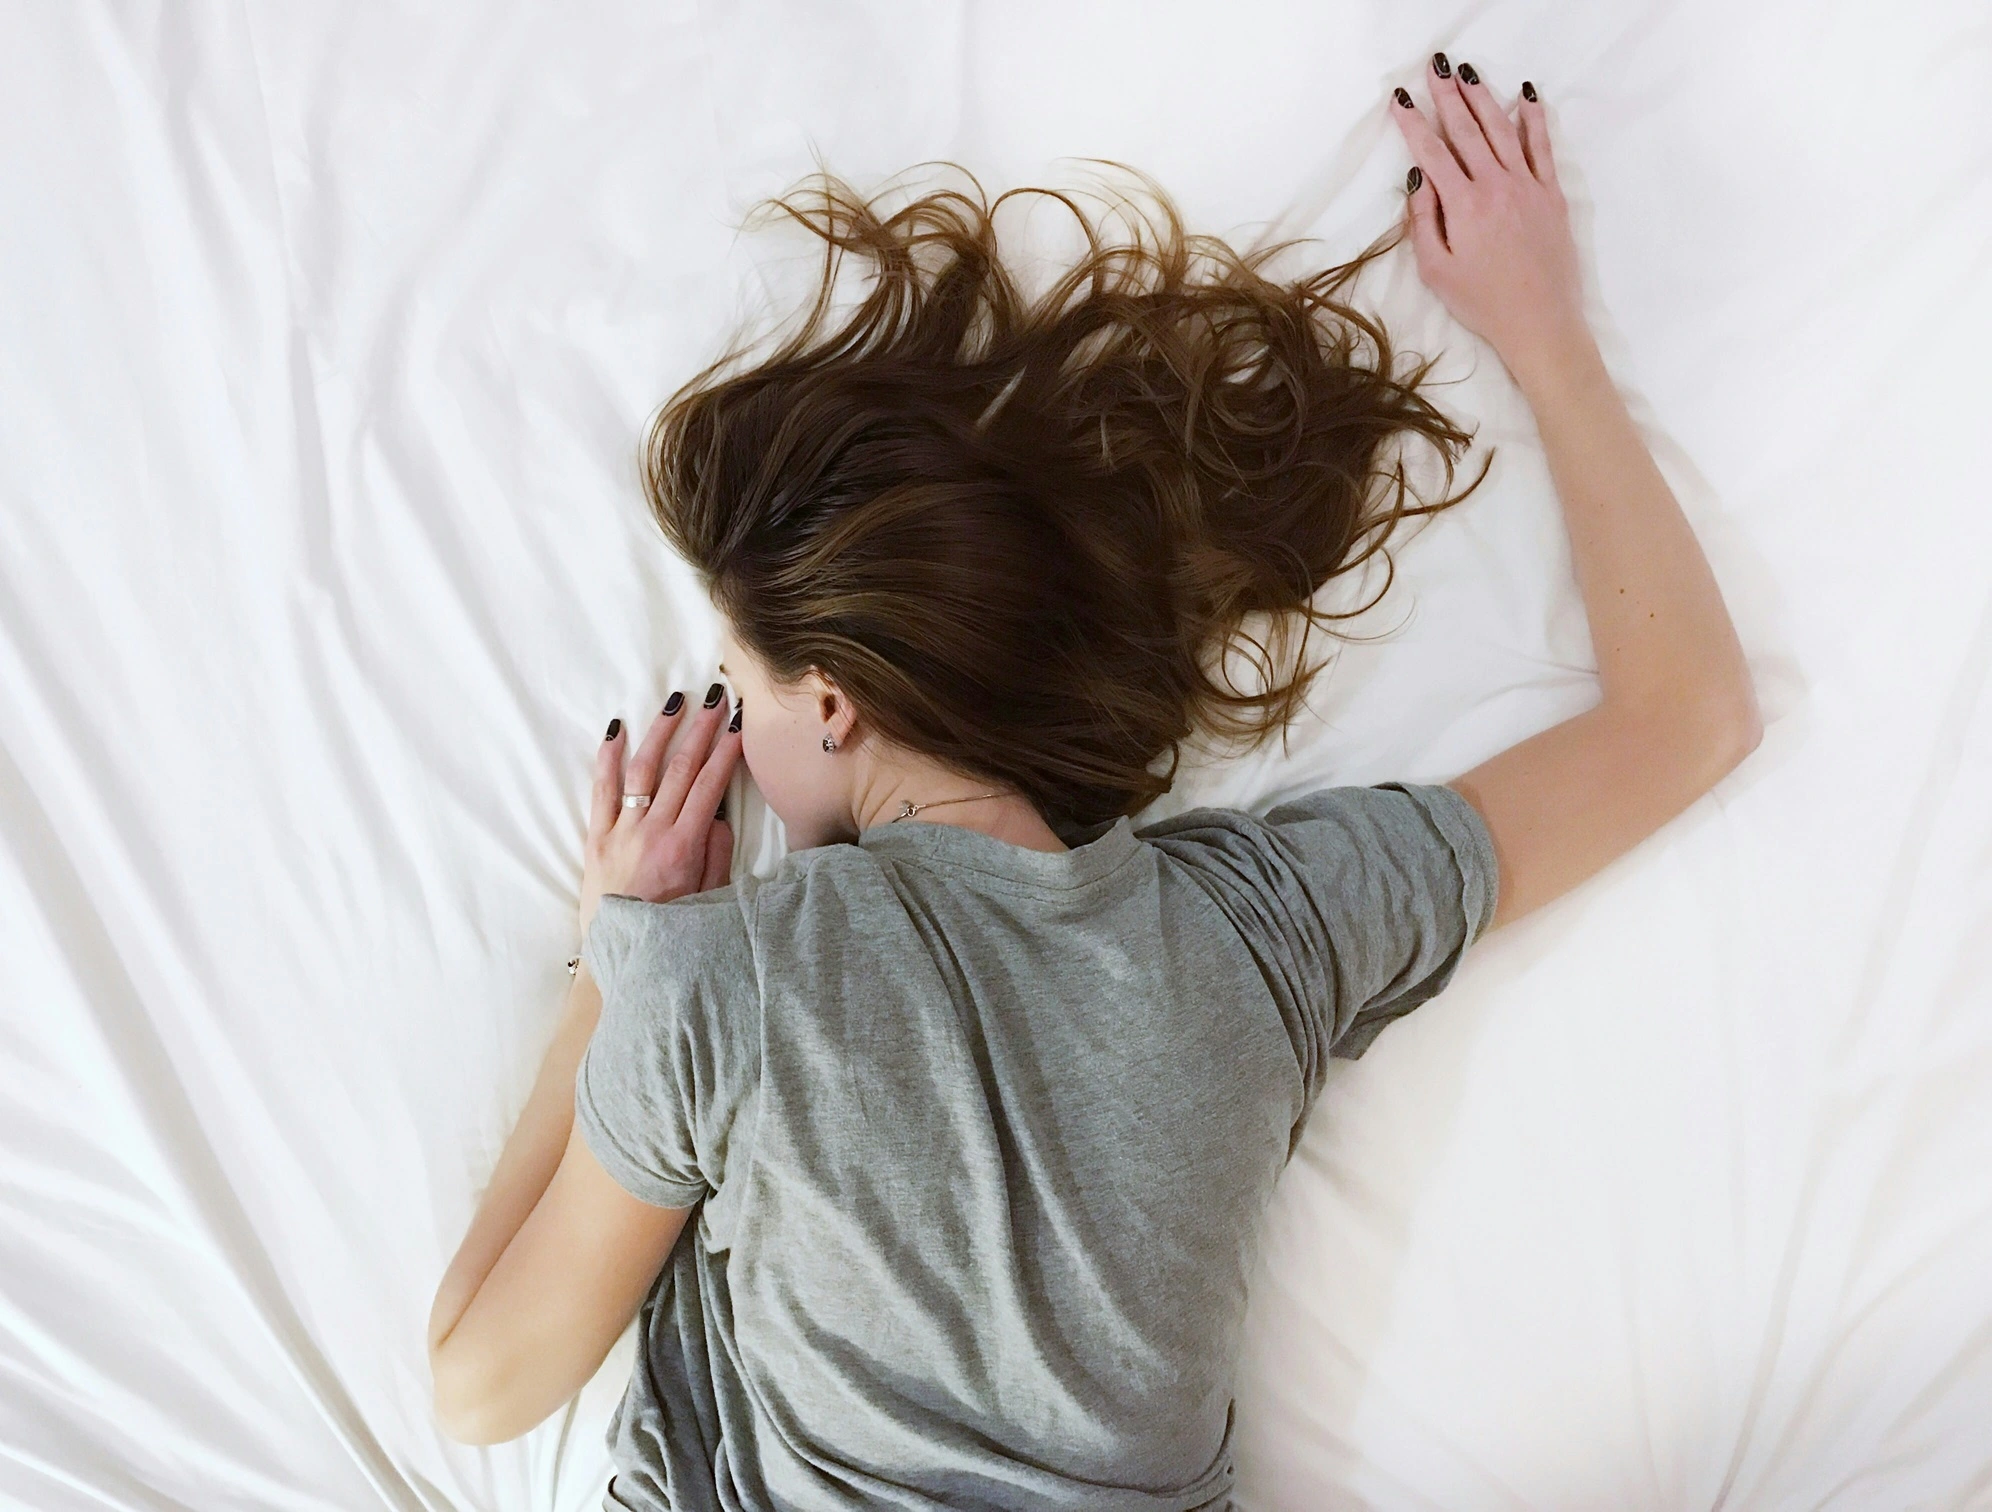 Best Insomnia Wellness (Sleep Therapy) Retreat to Beat Insomnia